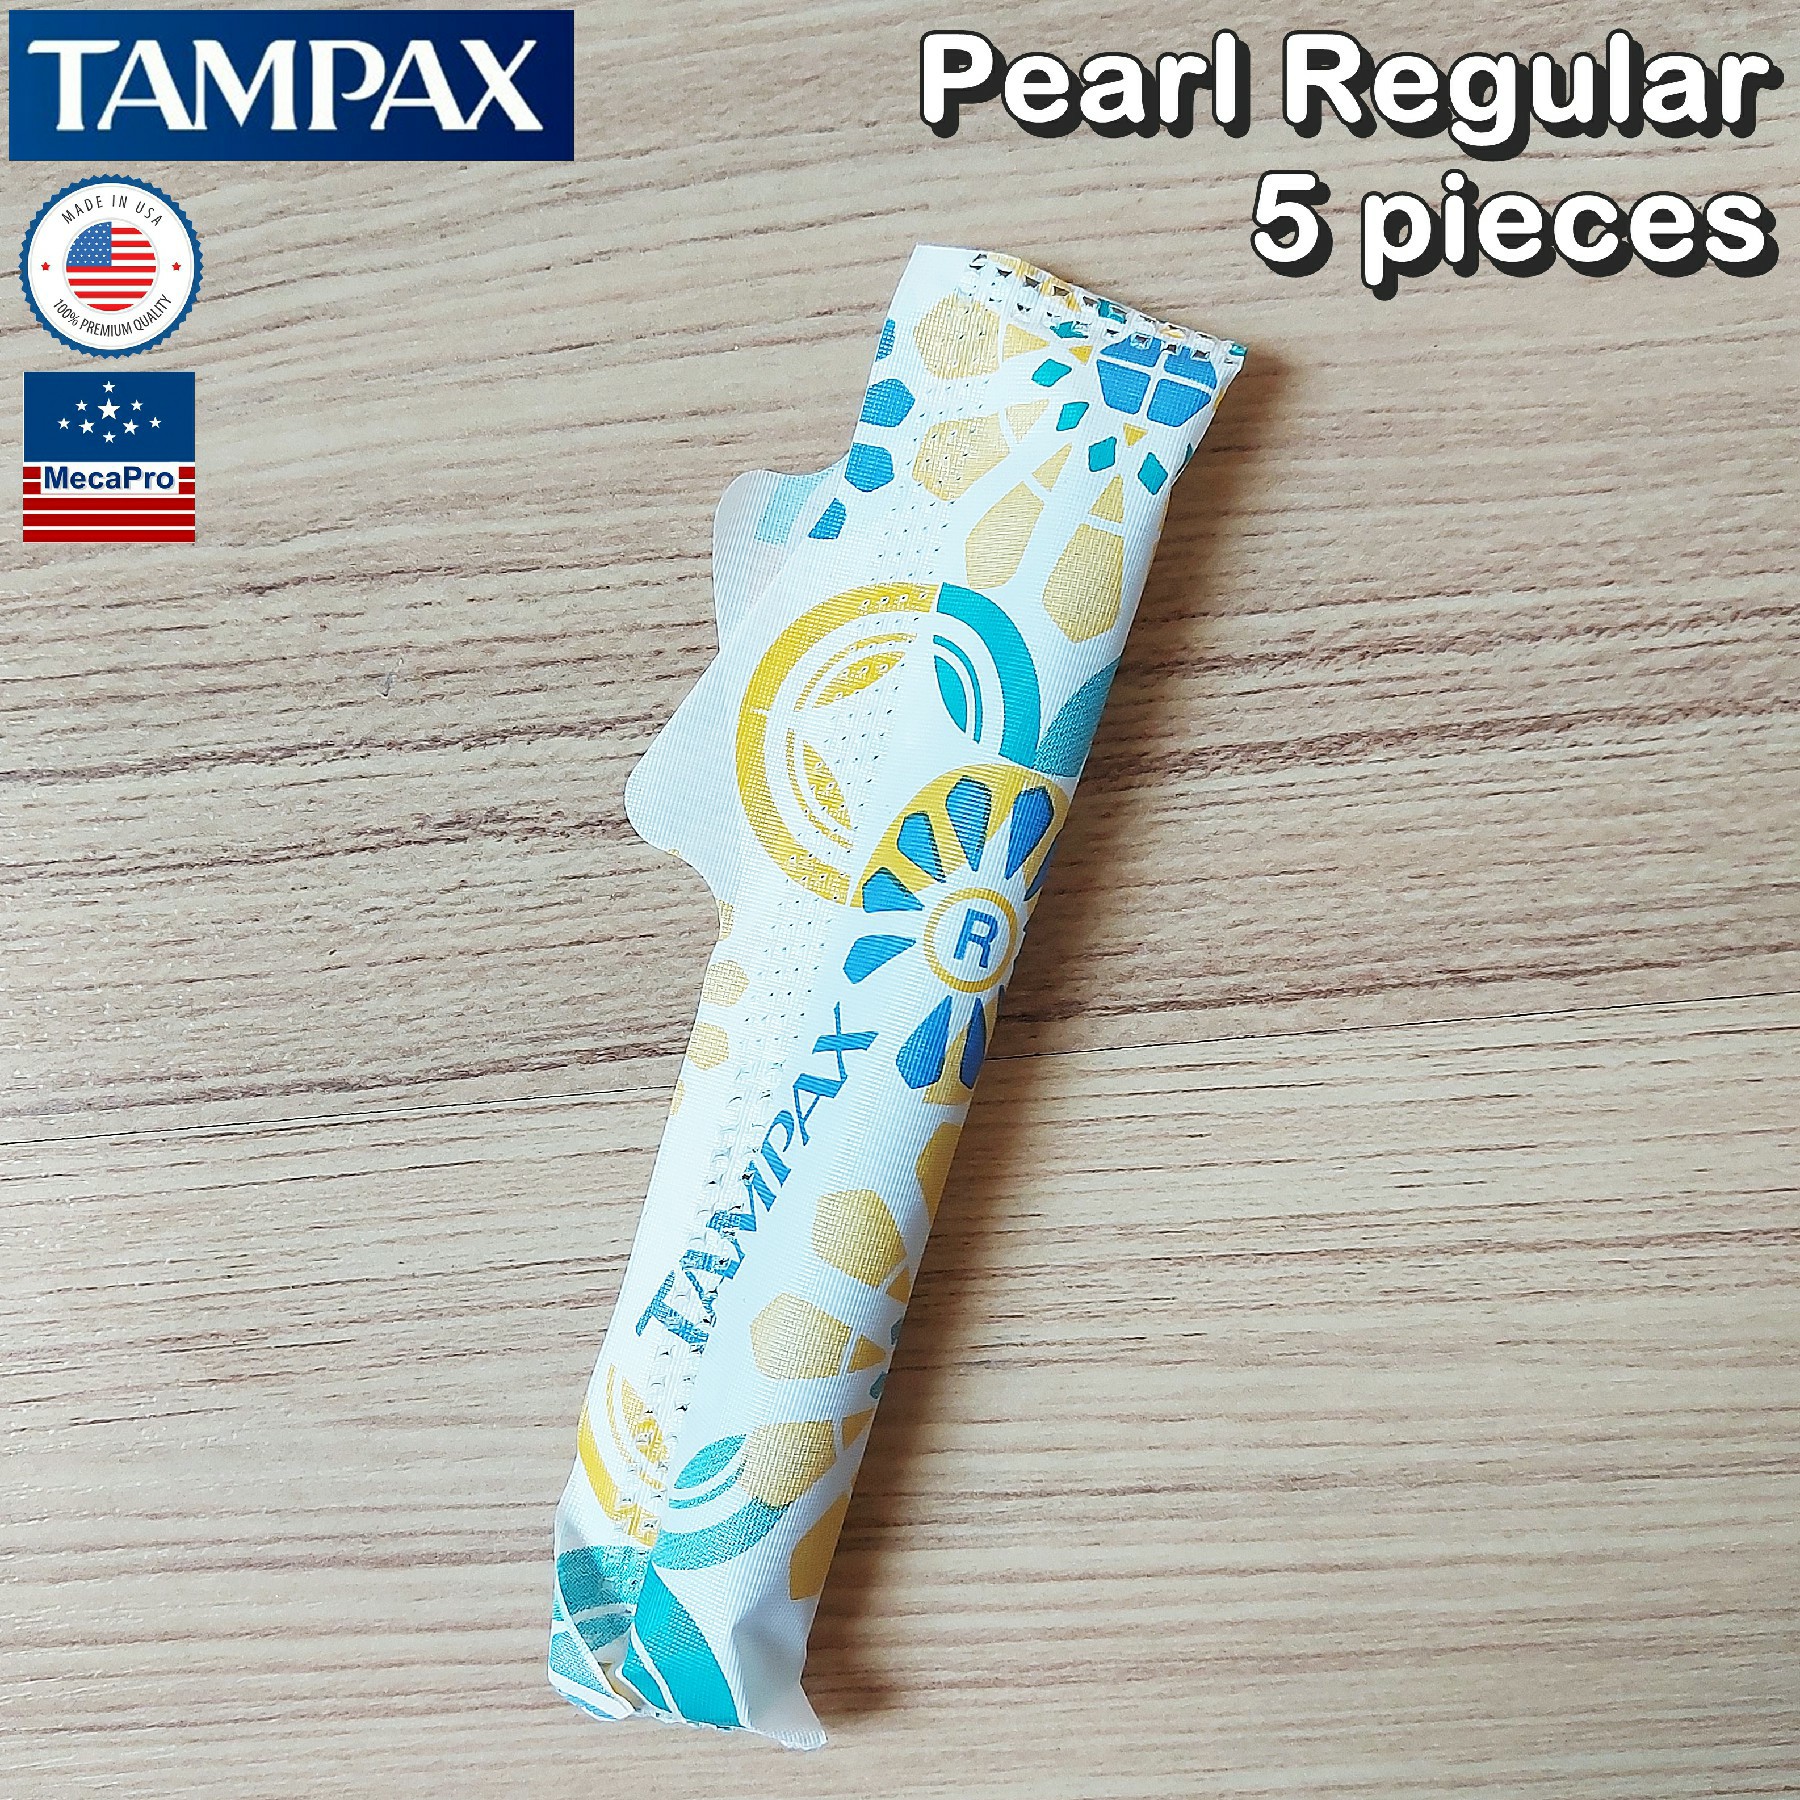 Tampax® Pearl Regular Plastic Tampons Unscented 5 pieces ผ้าอนามัยแบบสอด 5 ชิ้น เหมาะกับวันมาปกติ สูตรไร้กลิ่น